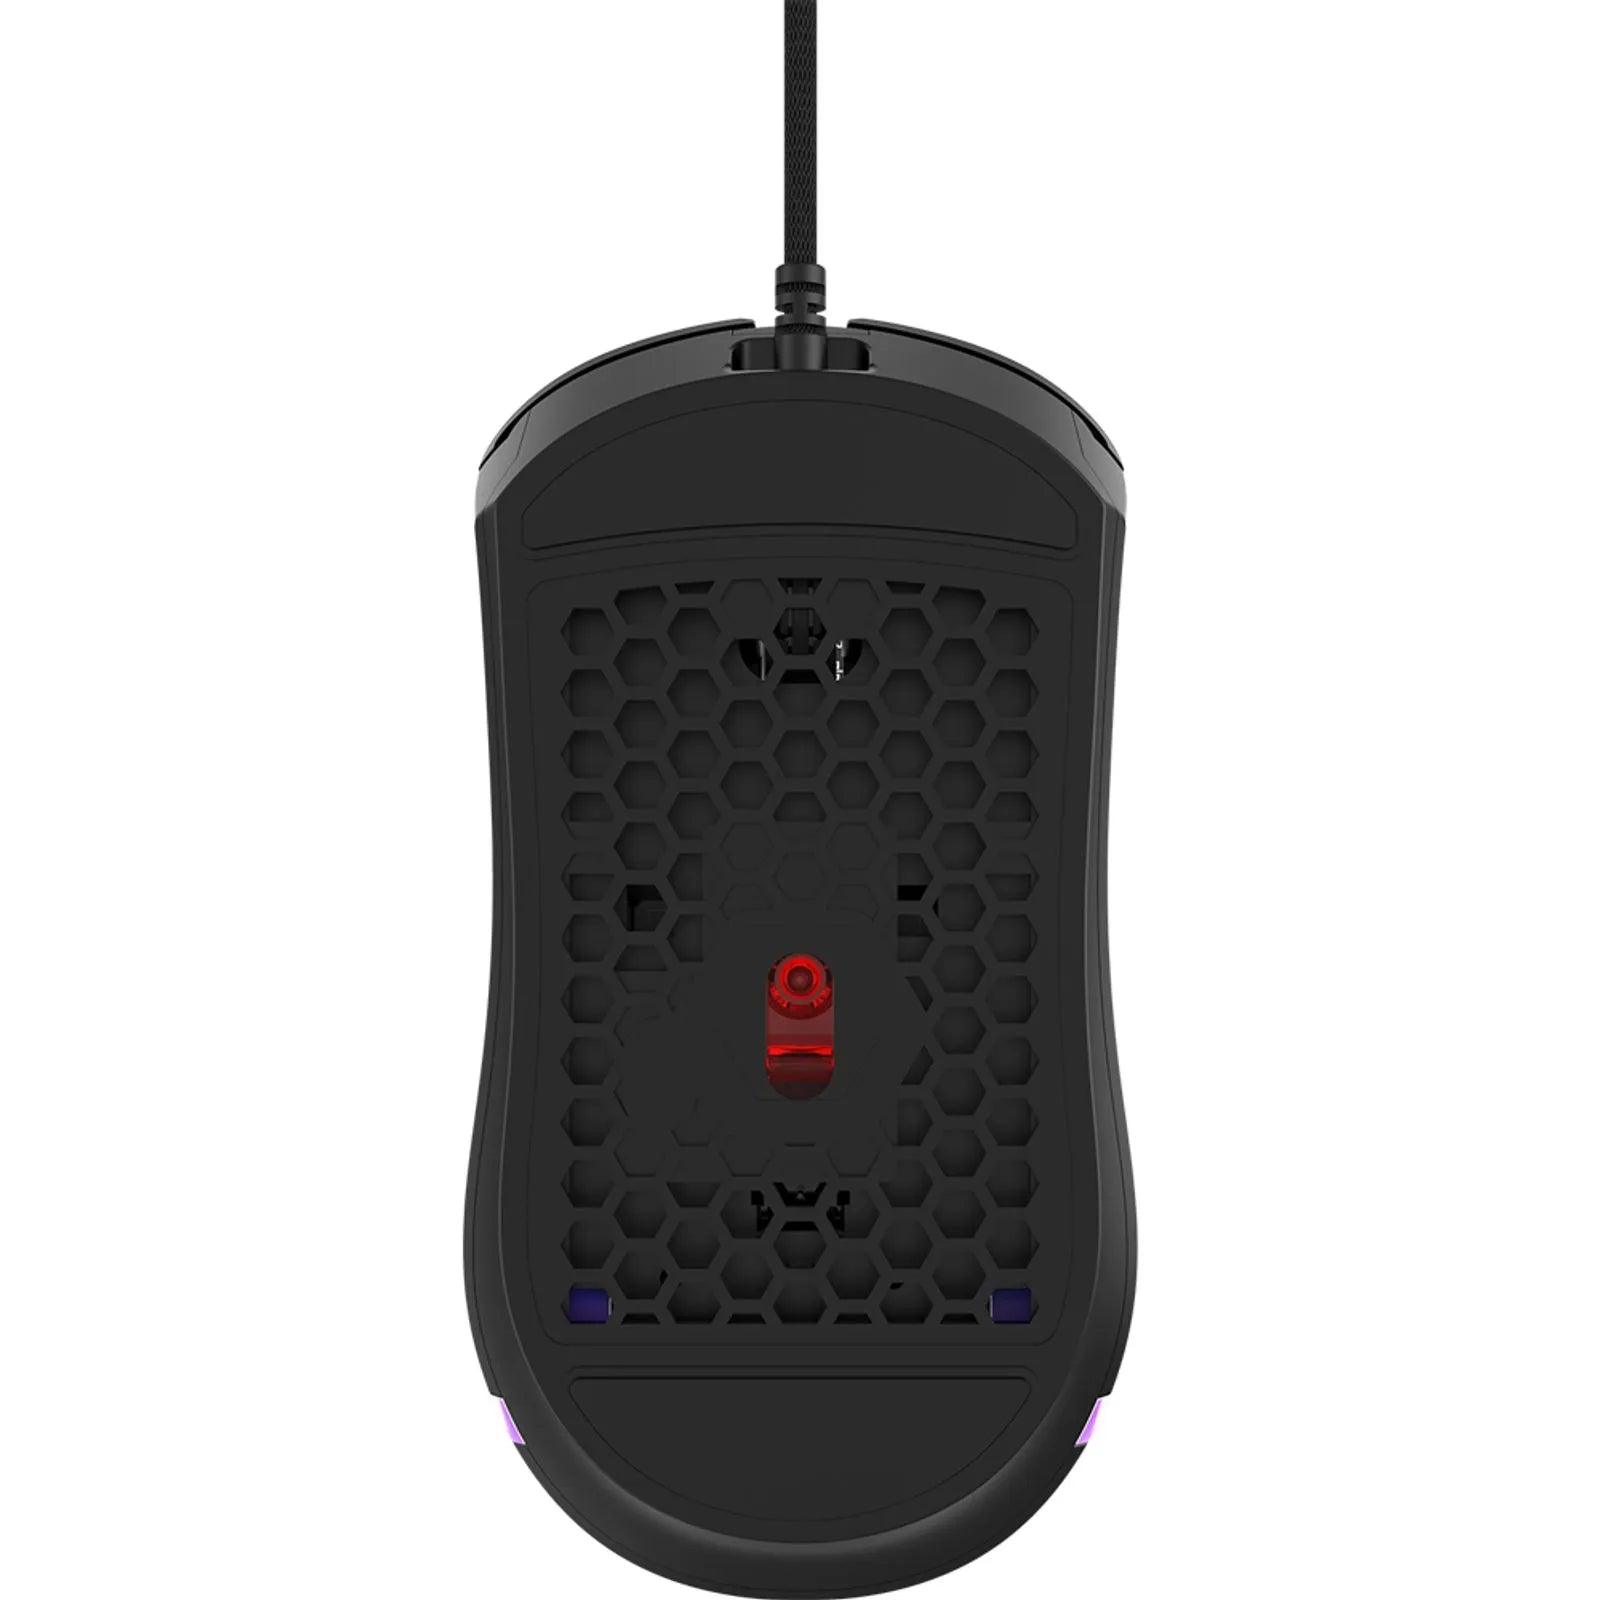 Mouse Gamer AOC 12000DPI RGB Ajuste De Peso - GM310B/FG - Mega Market